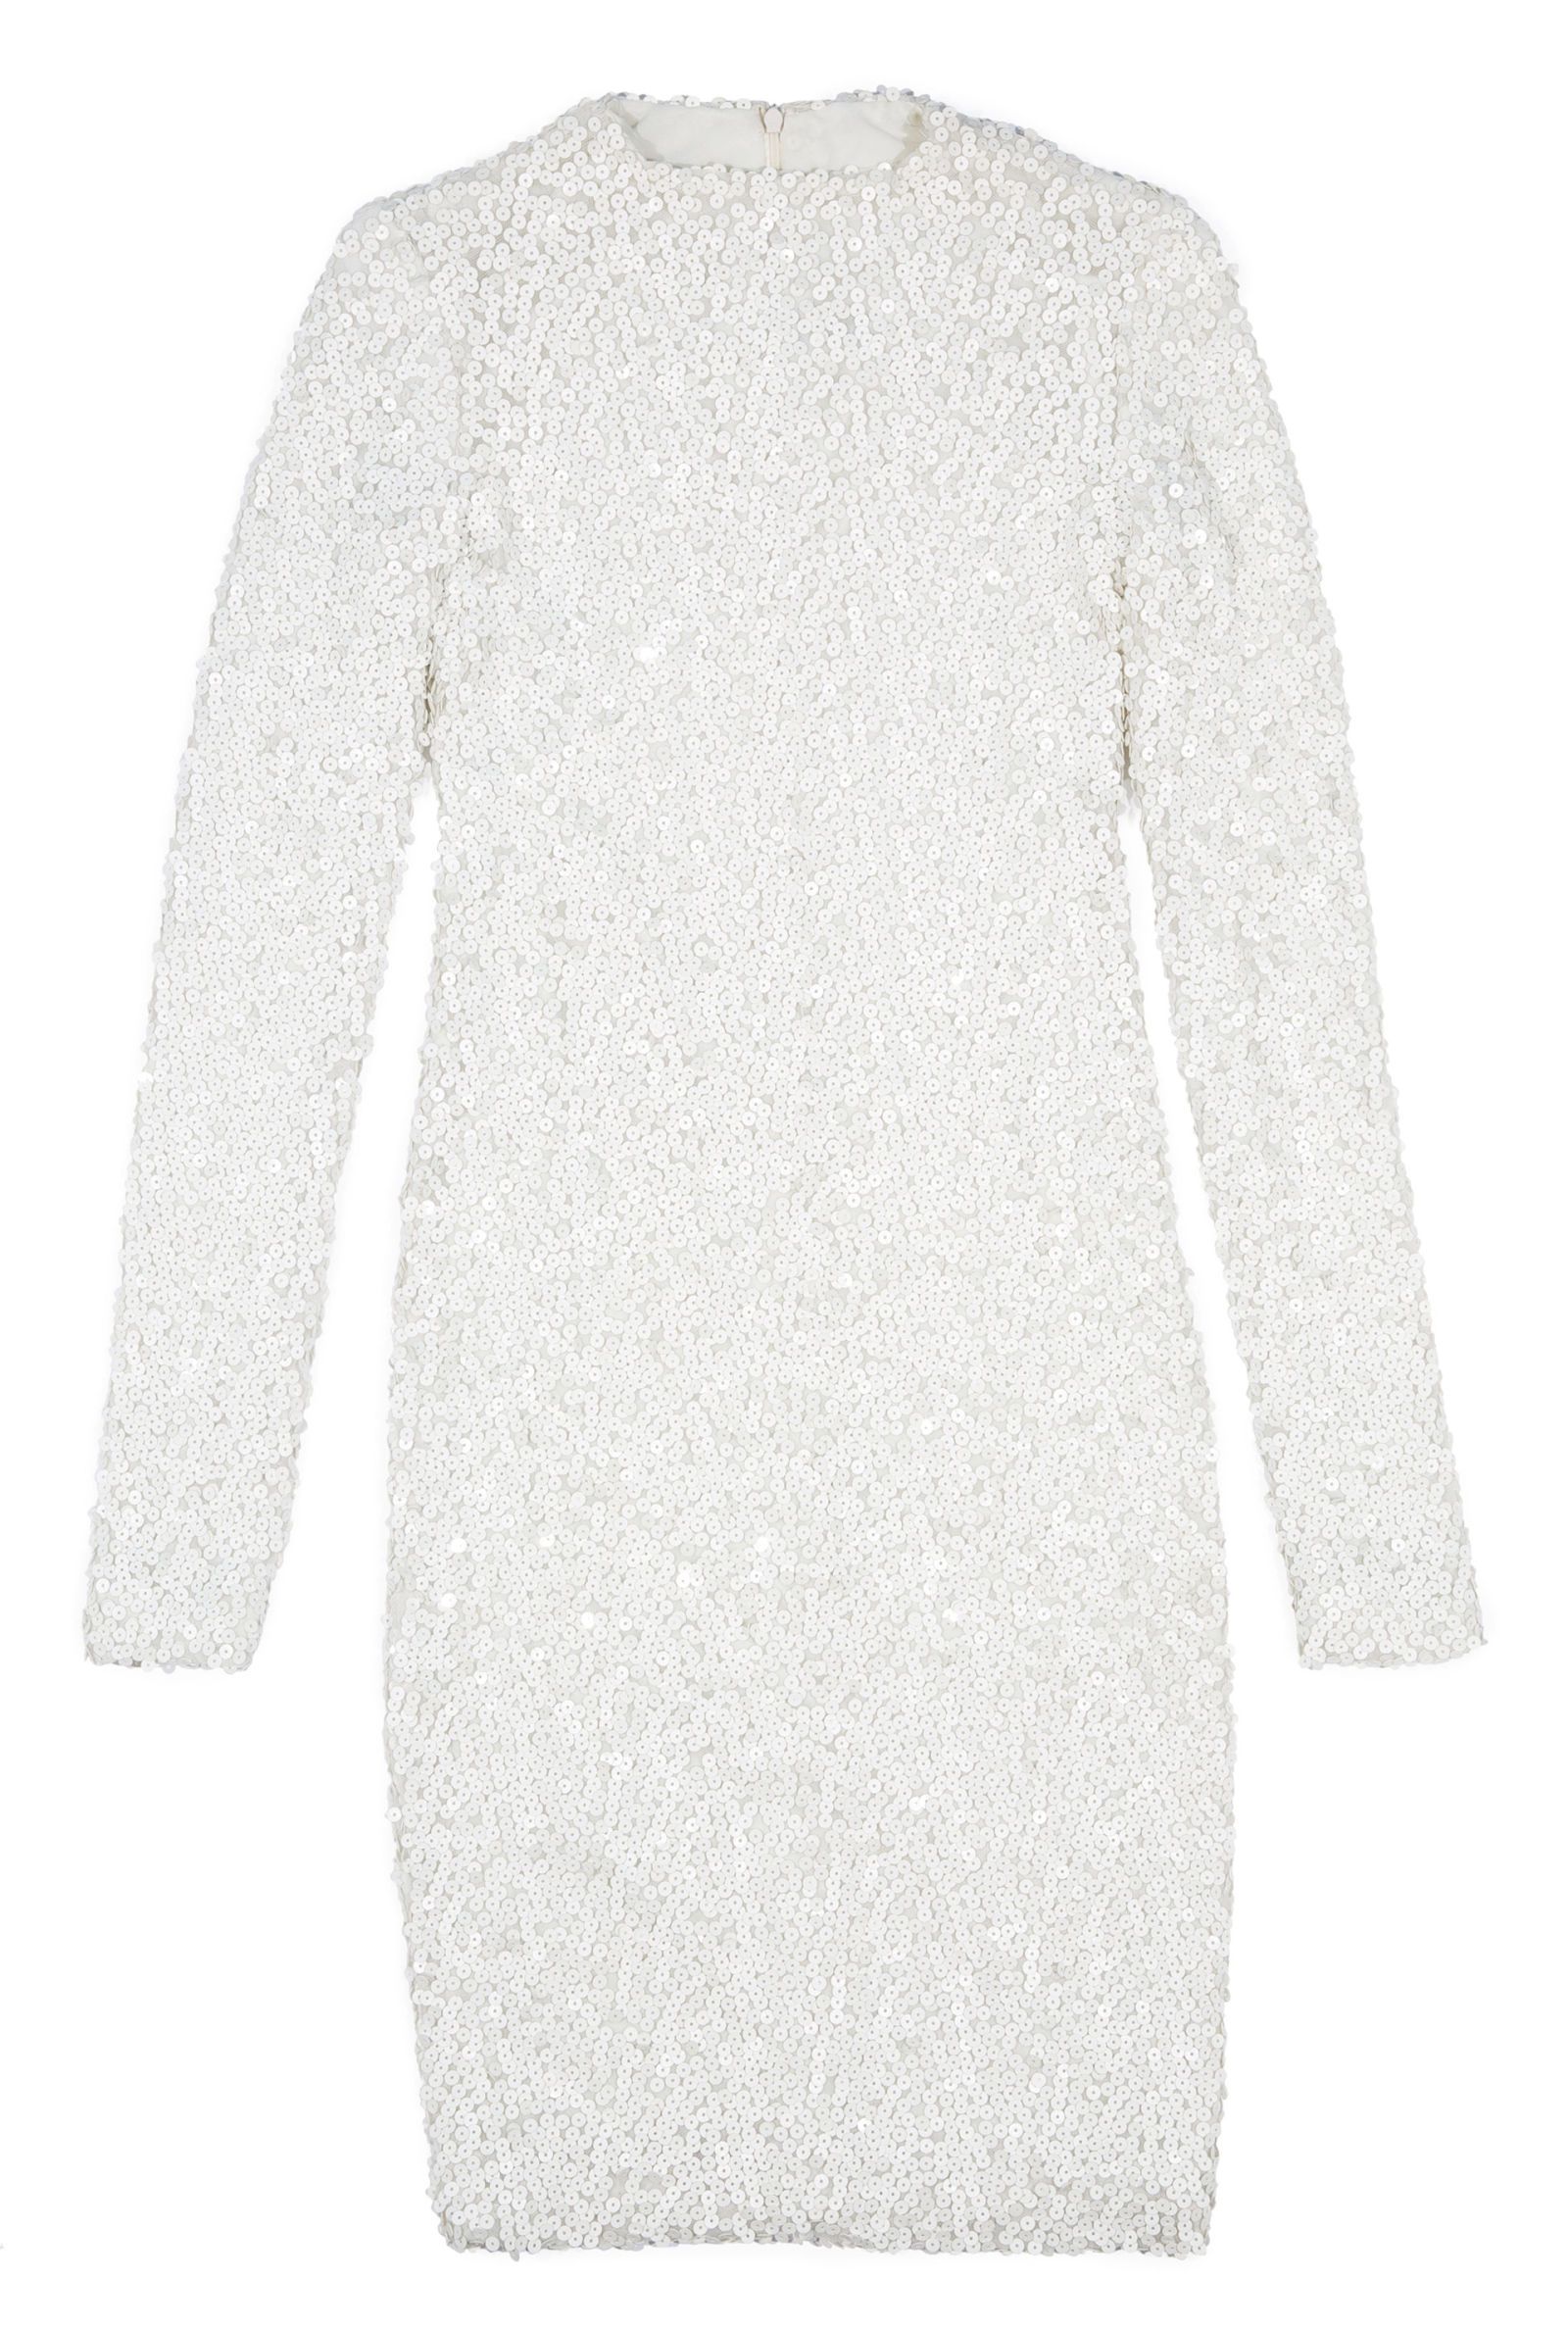 rachel zoe white sequin dress